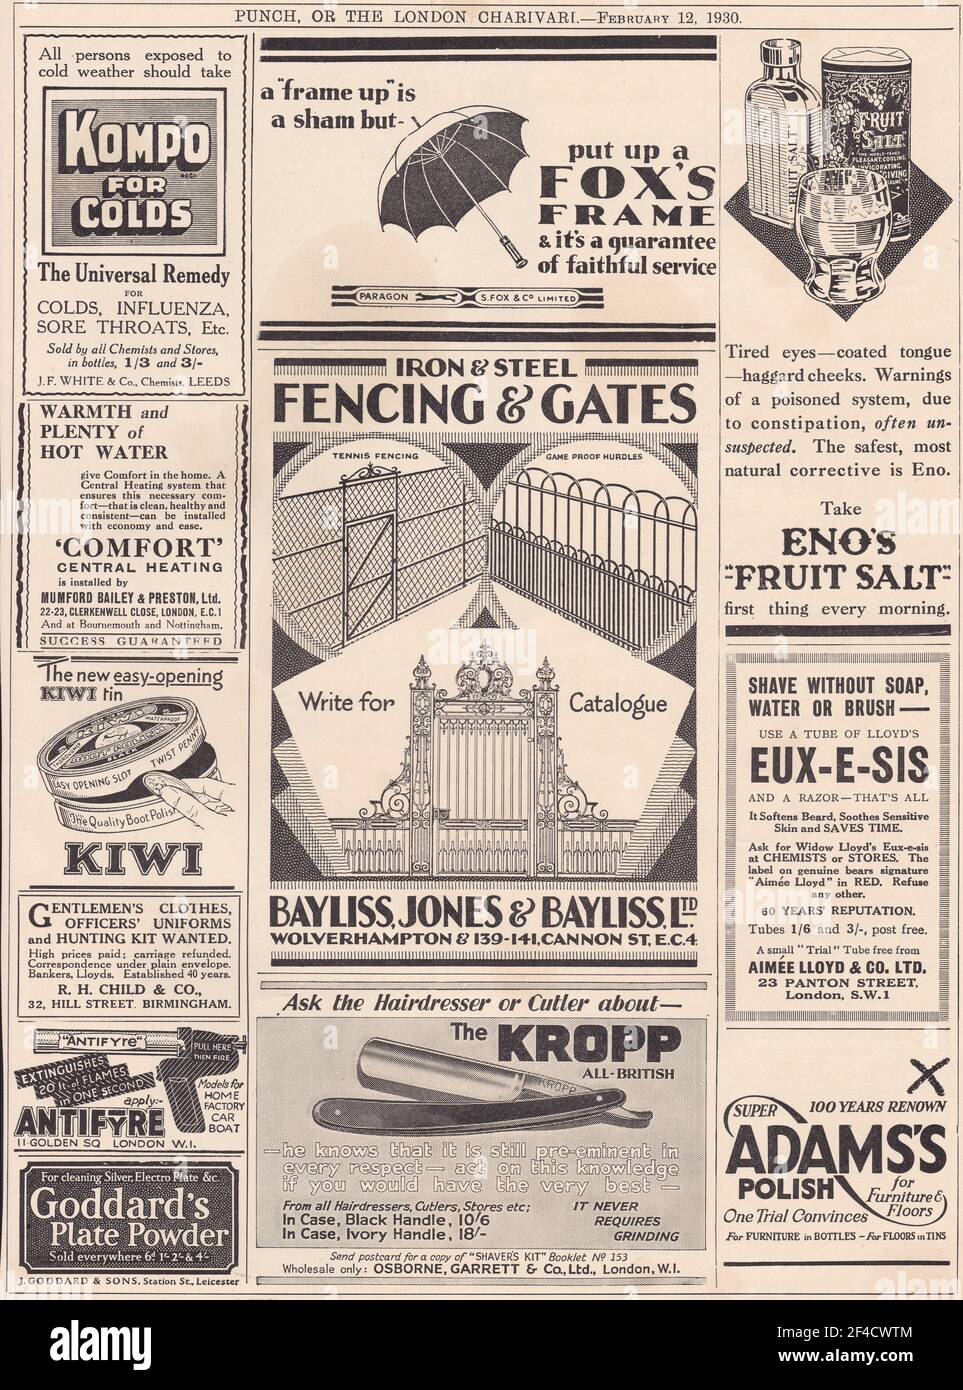 Vintage advert for Kompo, Fox's Frame / Paragon, Eno's Fruit Salt, Mumford Bailey Central Heating, Kiwi, Bayliss Jones and Bayliss, The Kropp, Eux-E. Stock Photo